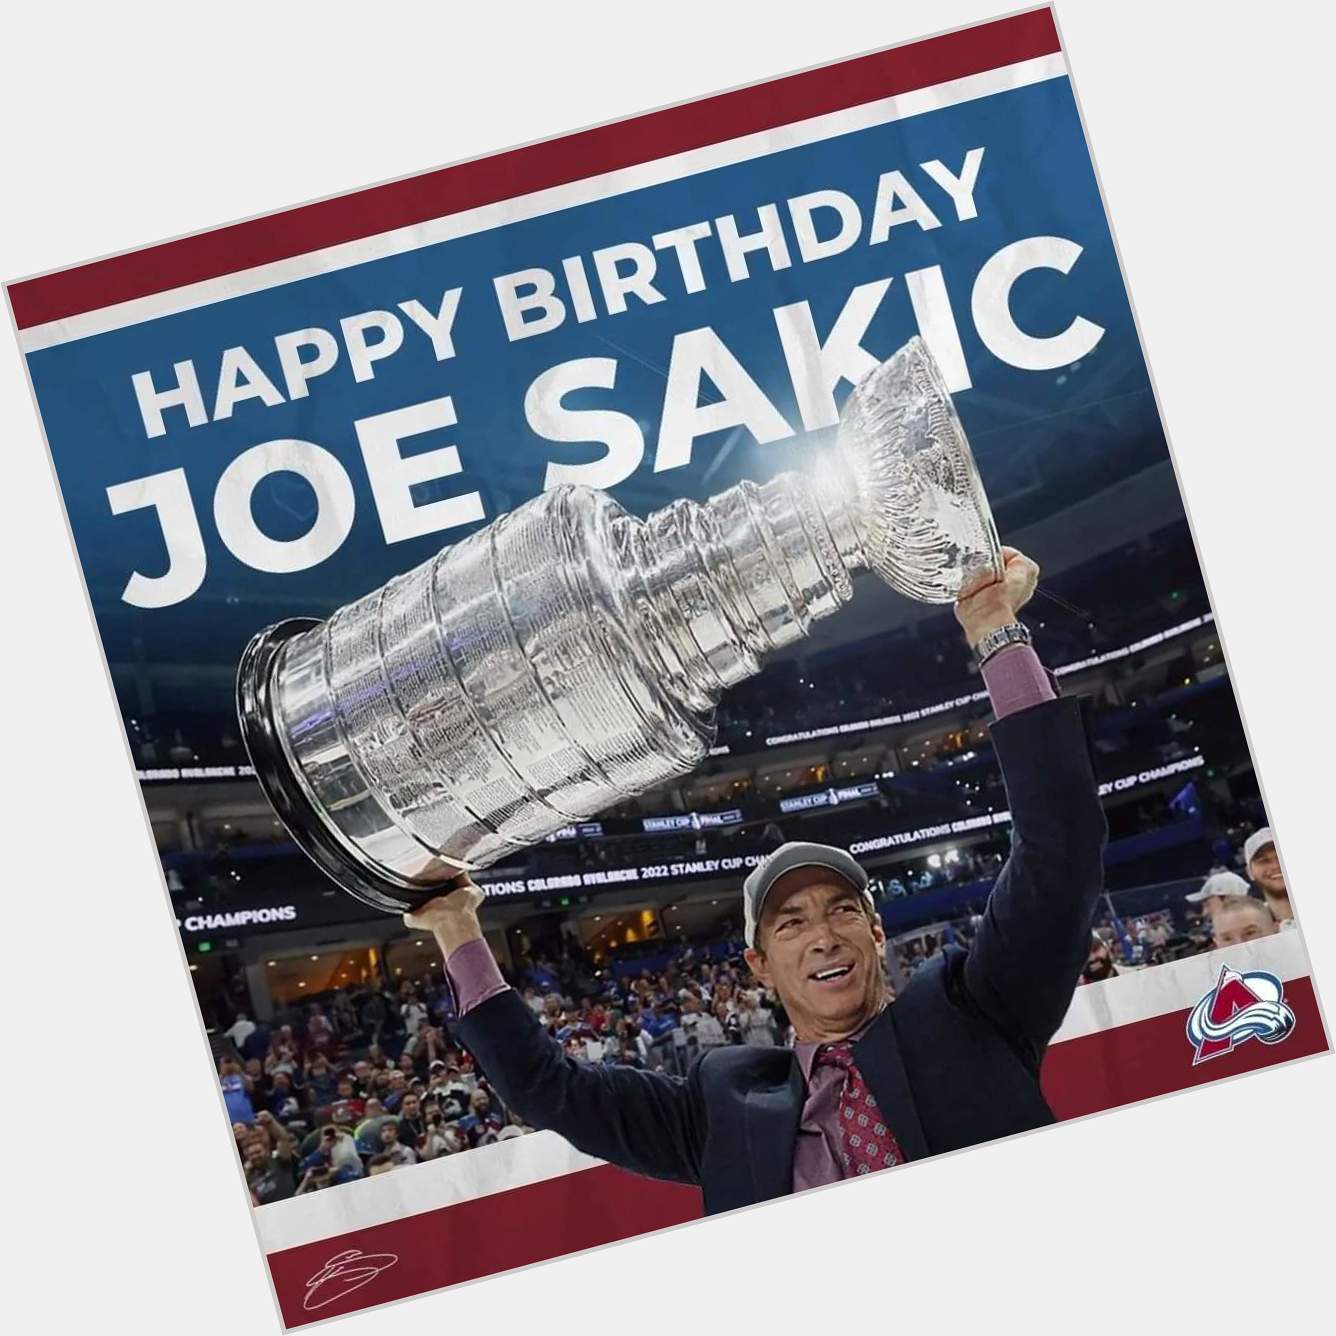 Everyone wish Joe Sakic happy birthday         